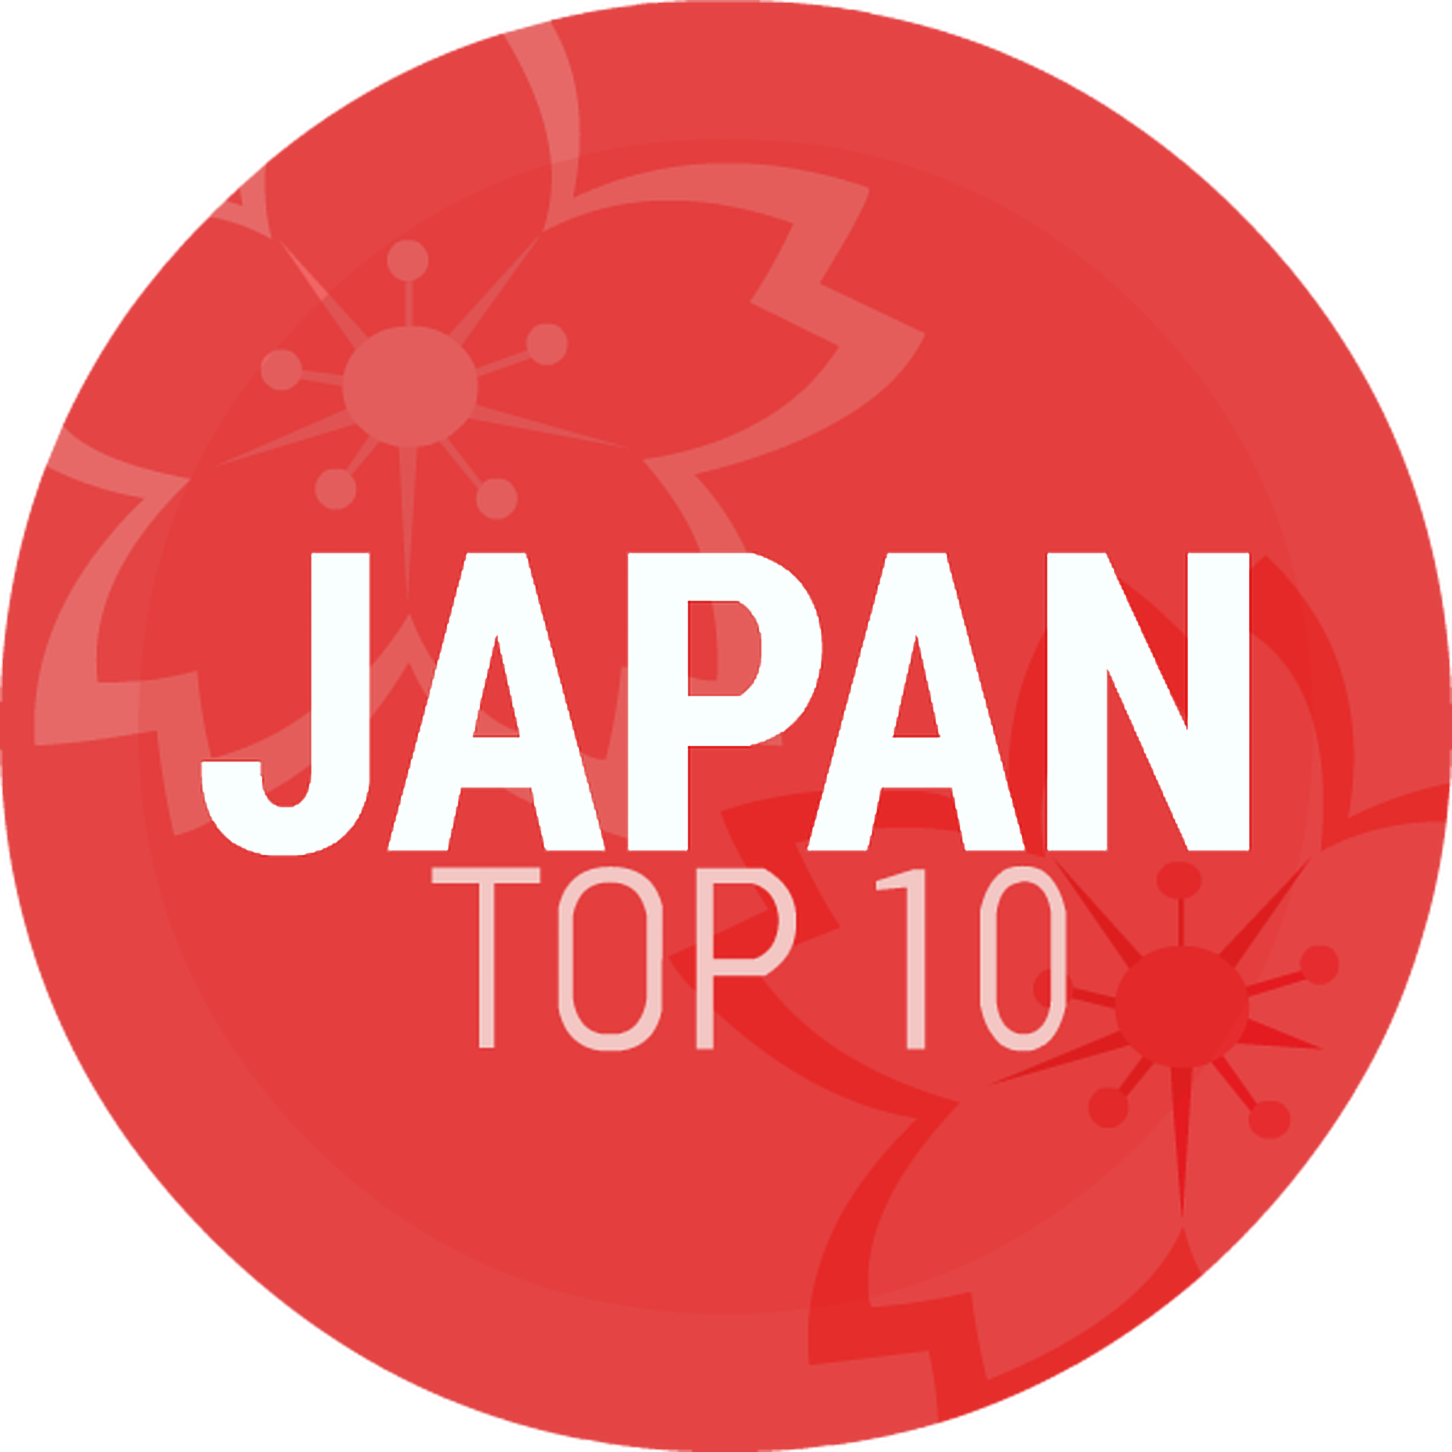 Episode 171: Japan Top 10 February 2017 Artist Of Month: Ikimonogakari